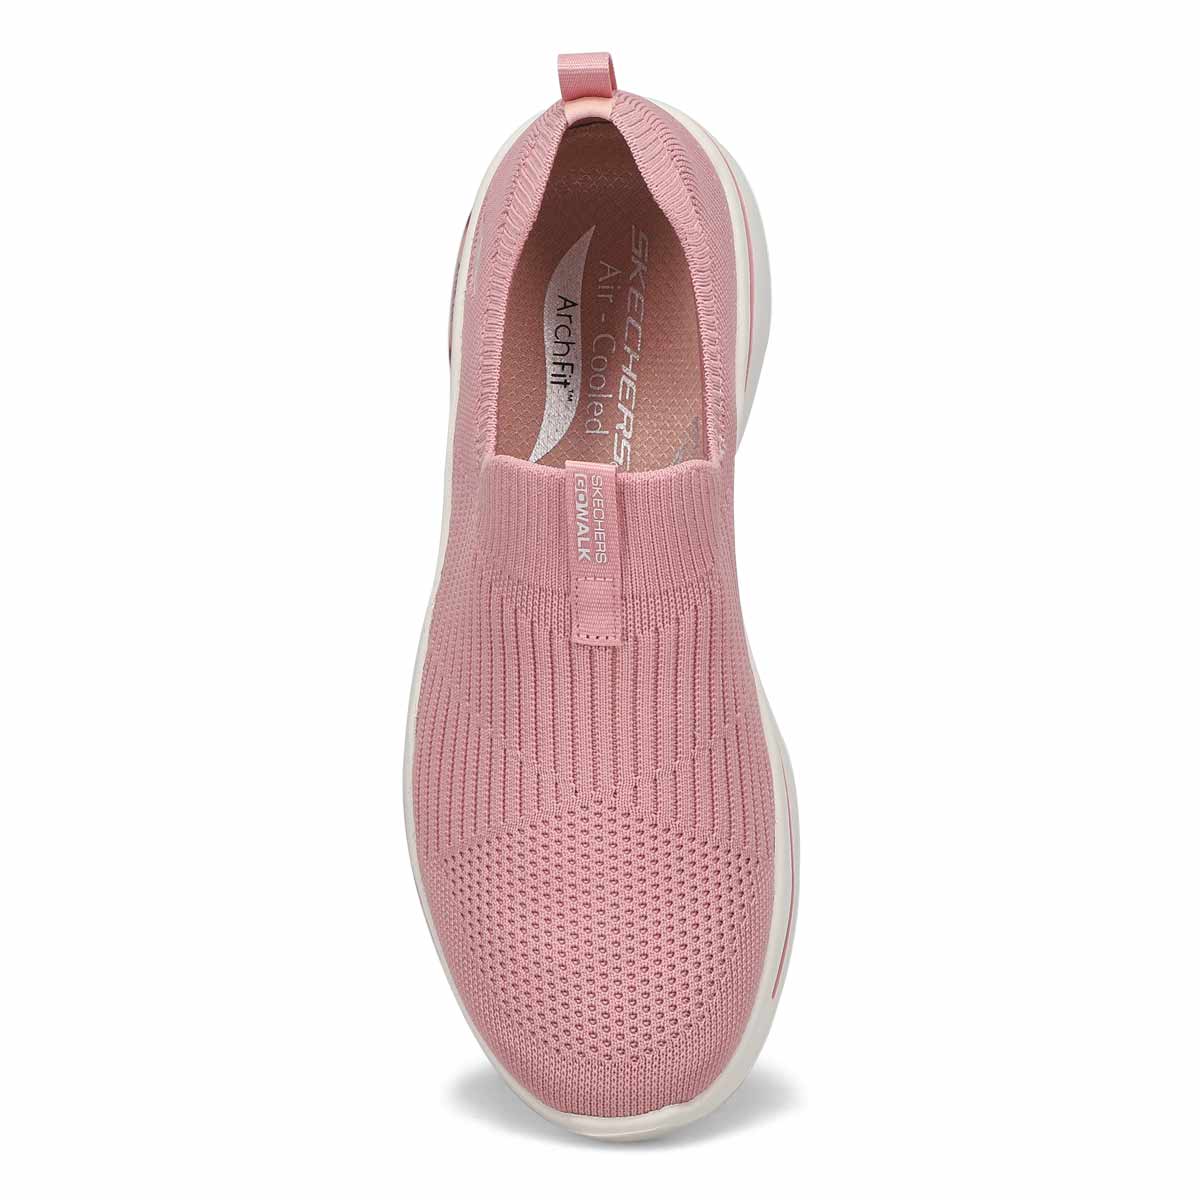 Women's Go Walk Arch Fit Iconic Sneaker - Pink